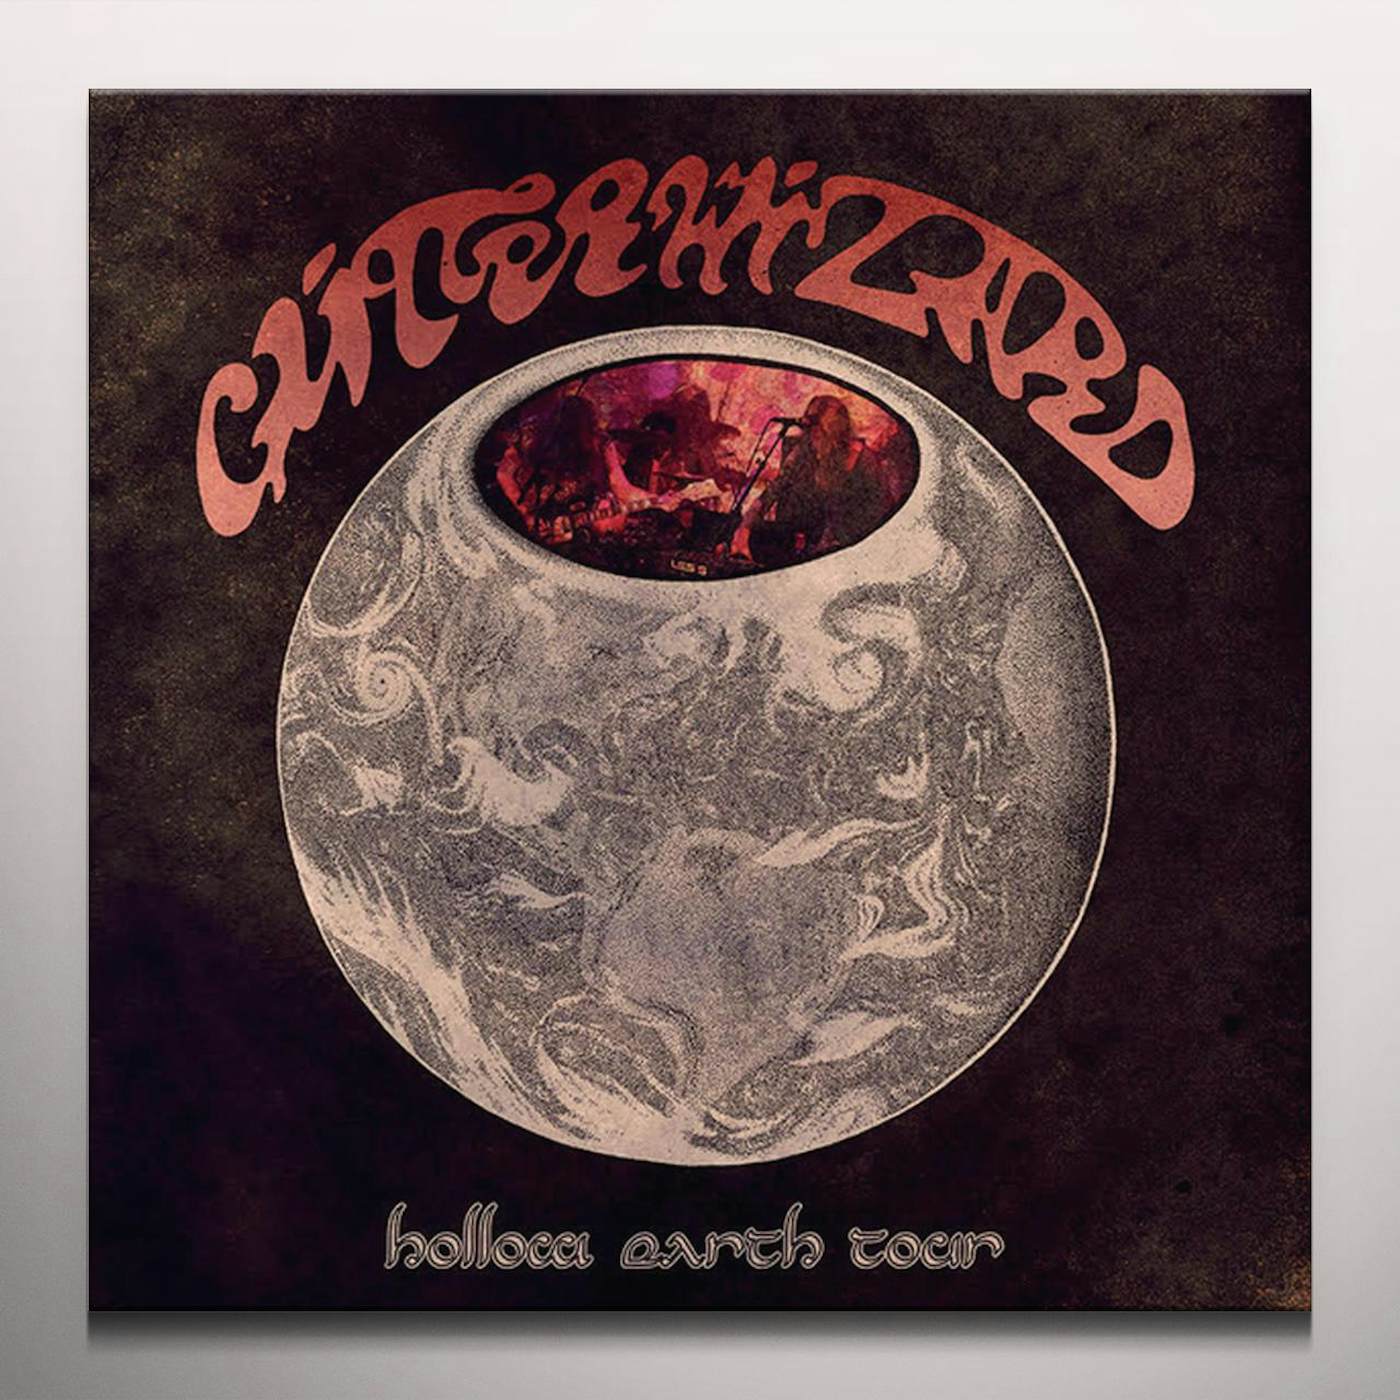 Glitter Wizard Hollow Earth Tour Vinyl Record